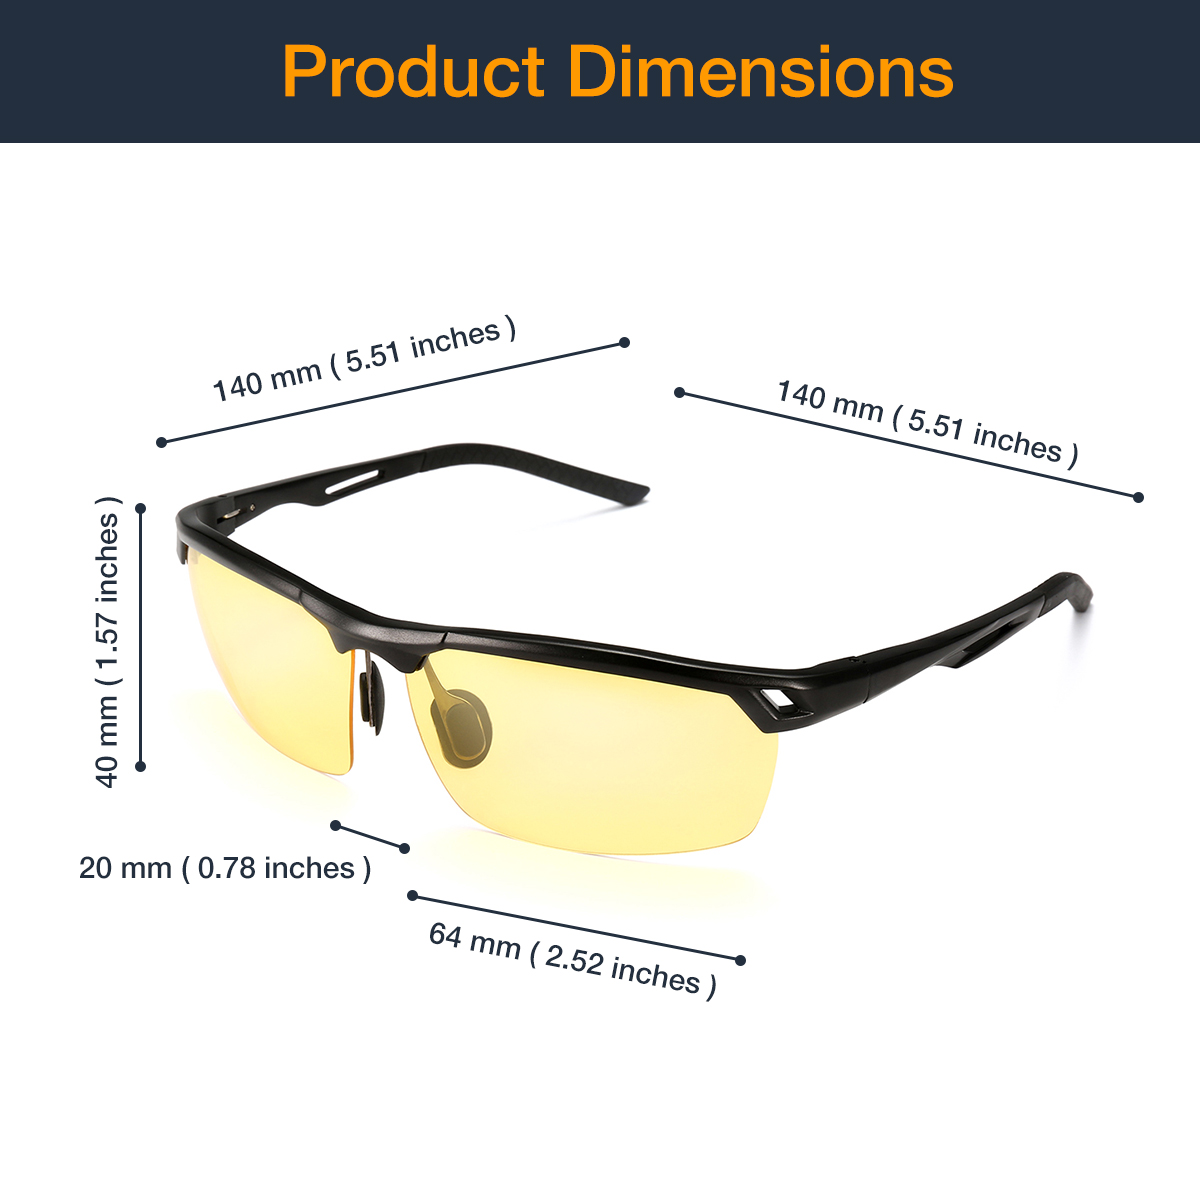 SGODDE-Mens-Anti-glare-Sunglasses-Pilot-Sports-Driving-HD-Glasses-Night-Vision-Sunglasses-1562834-6